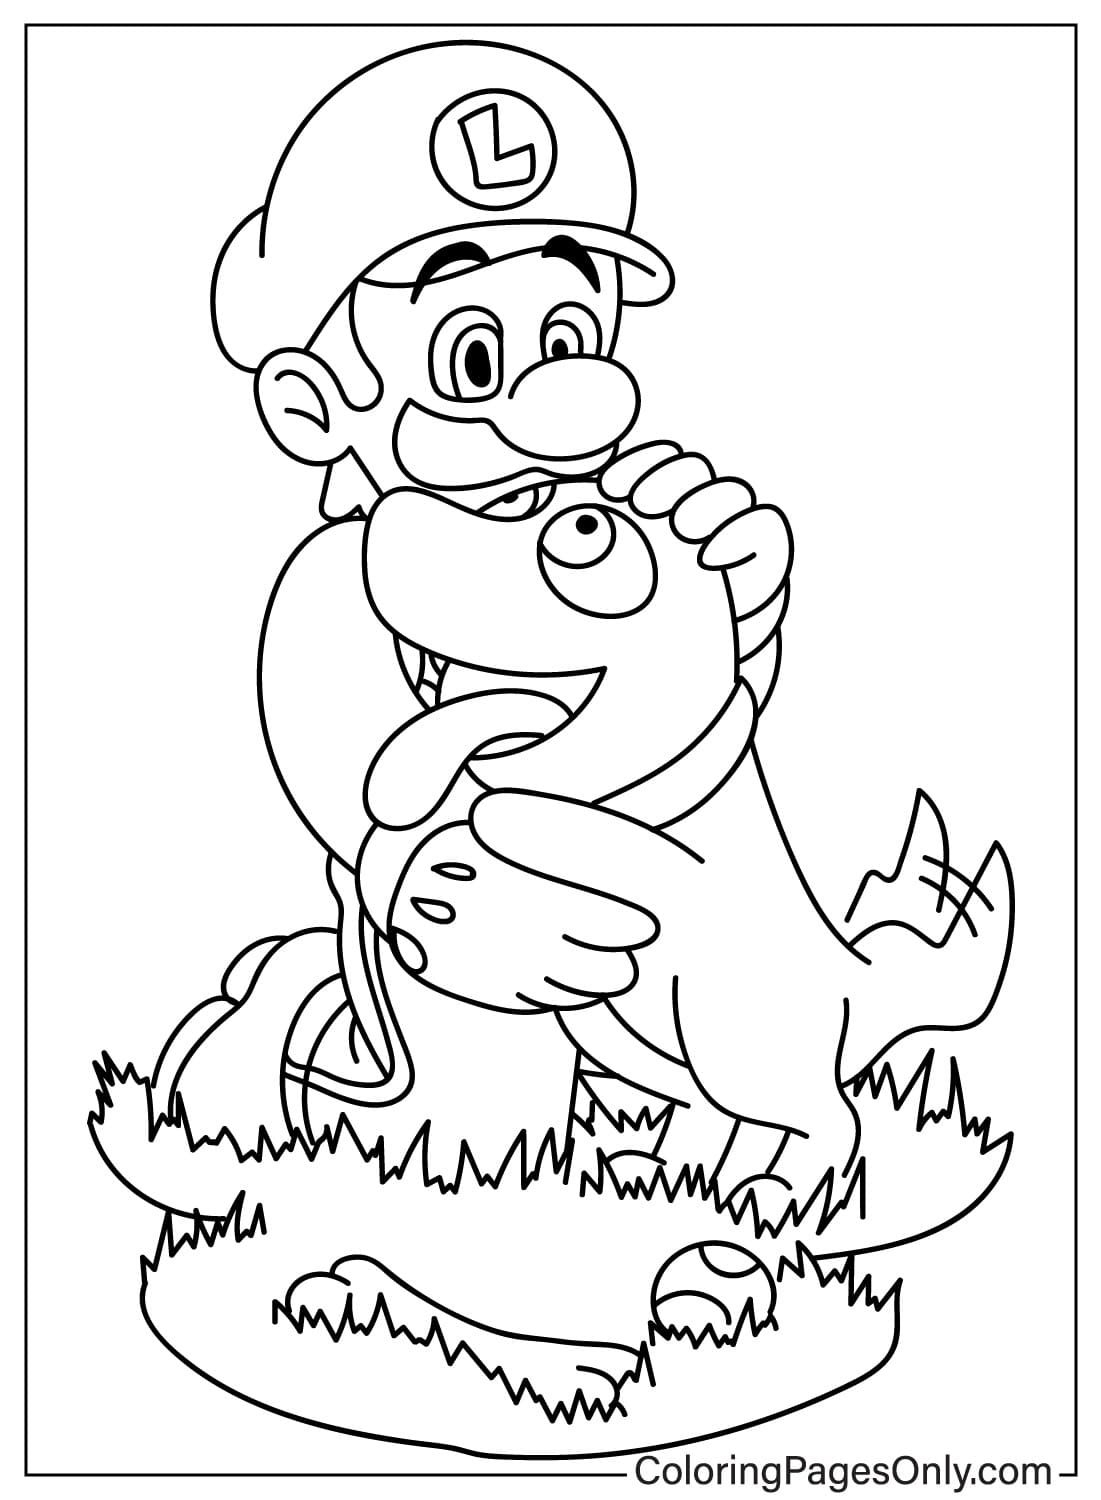 Luigi Free Coloring Page